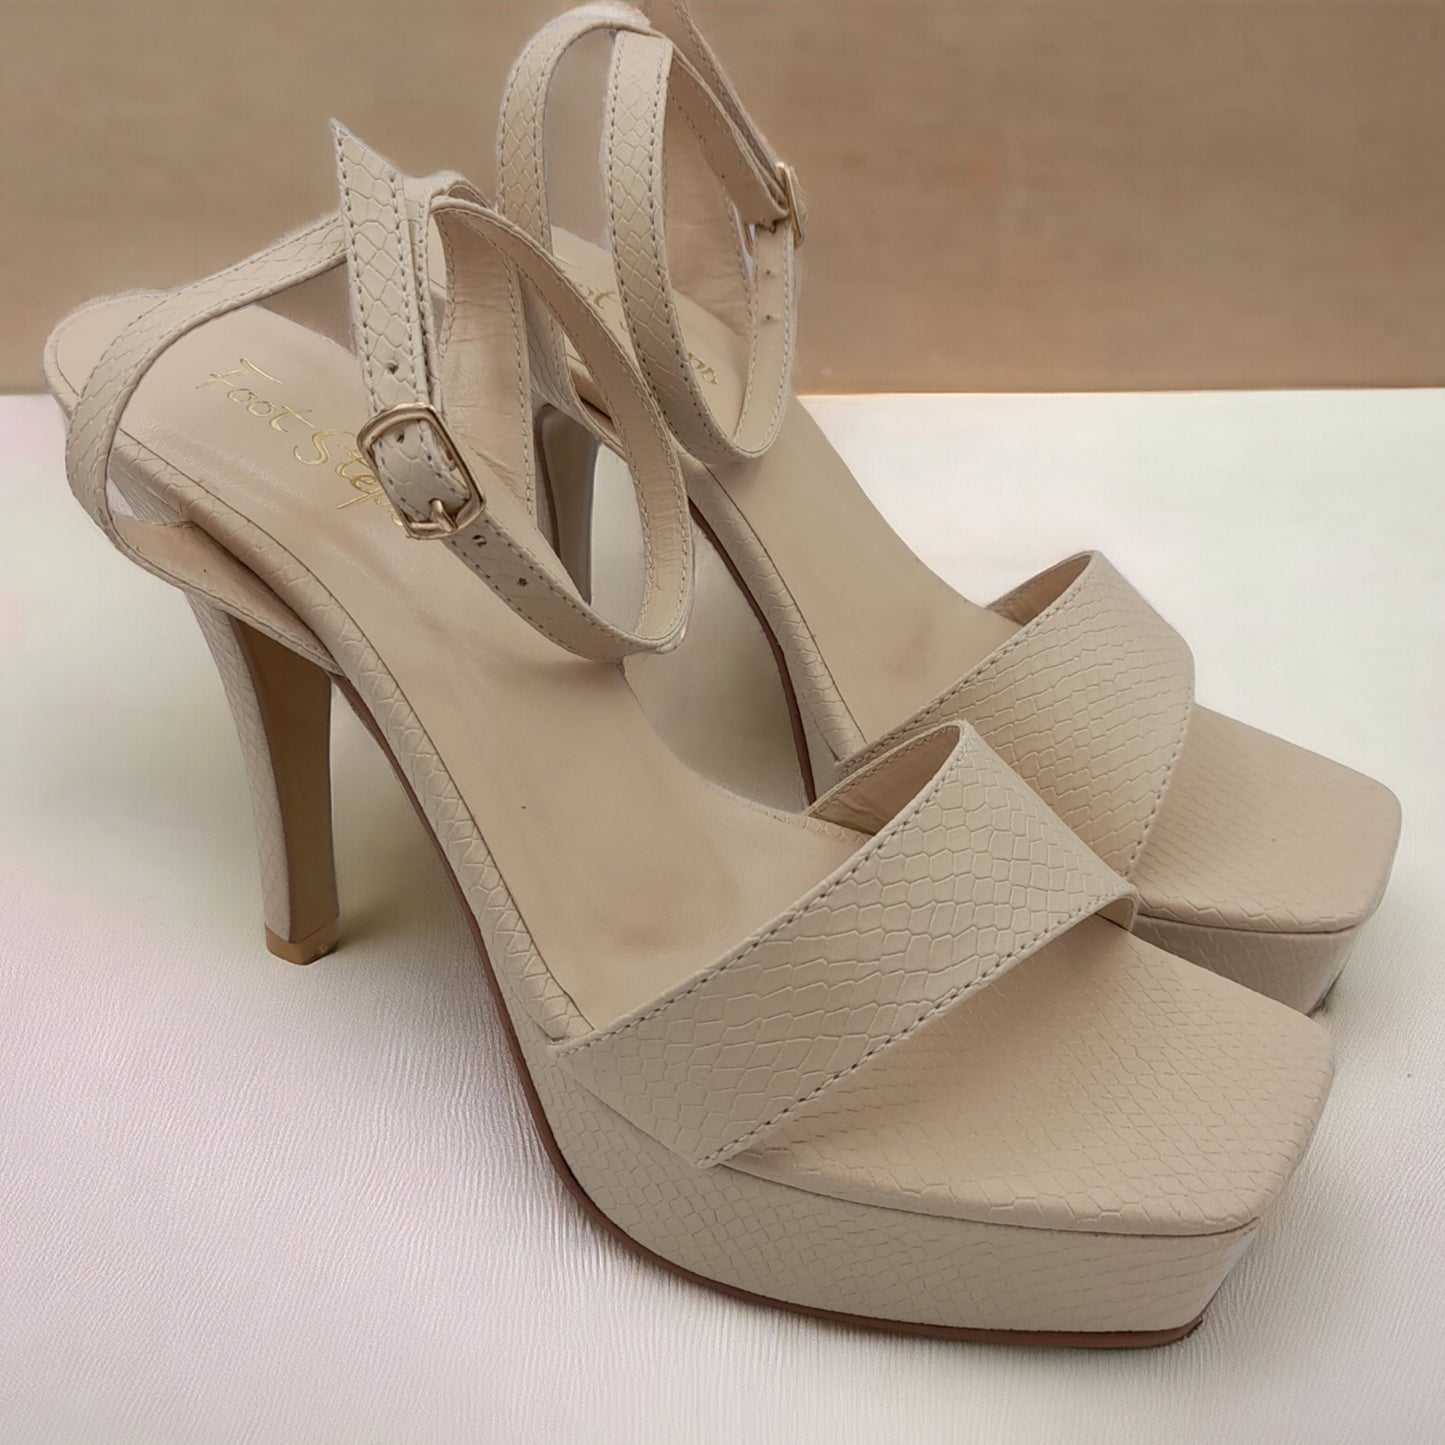 Platform Stiletto High Heels Sandals With Ankle Strap For Women